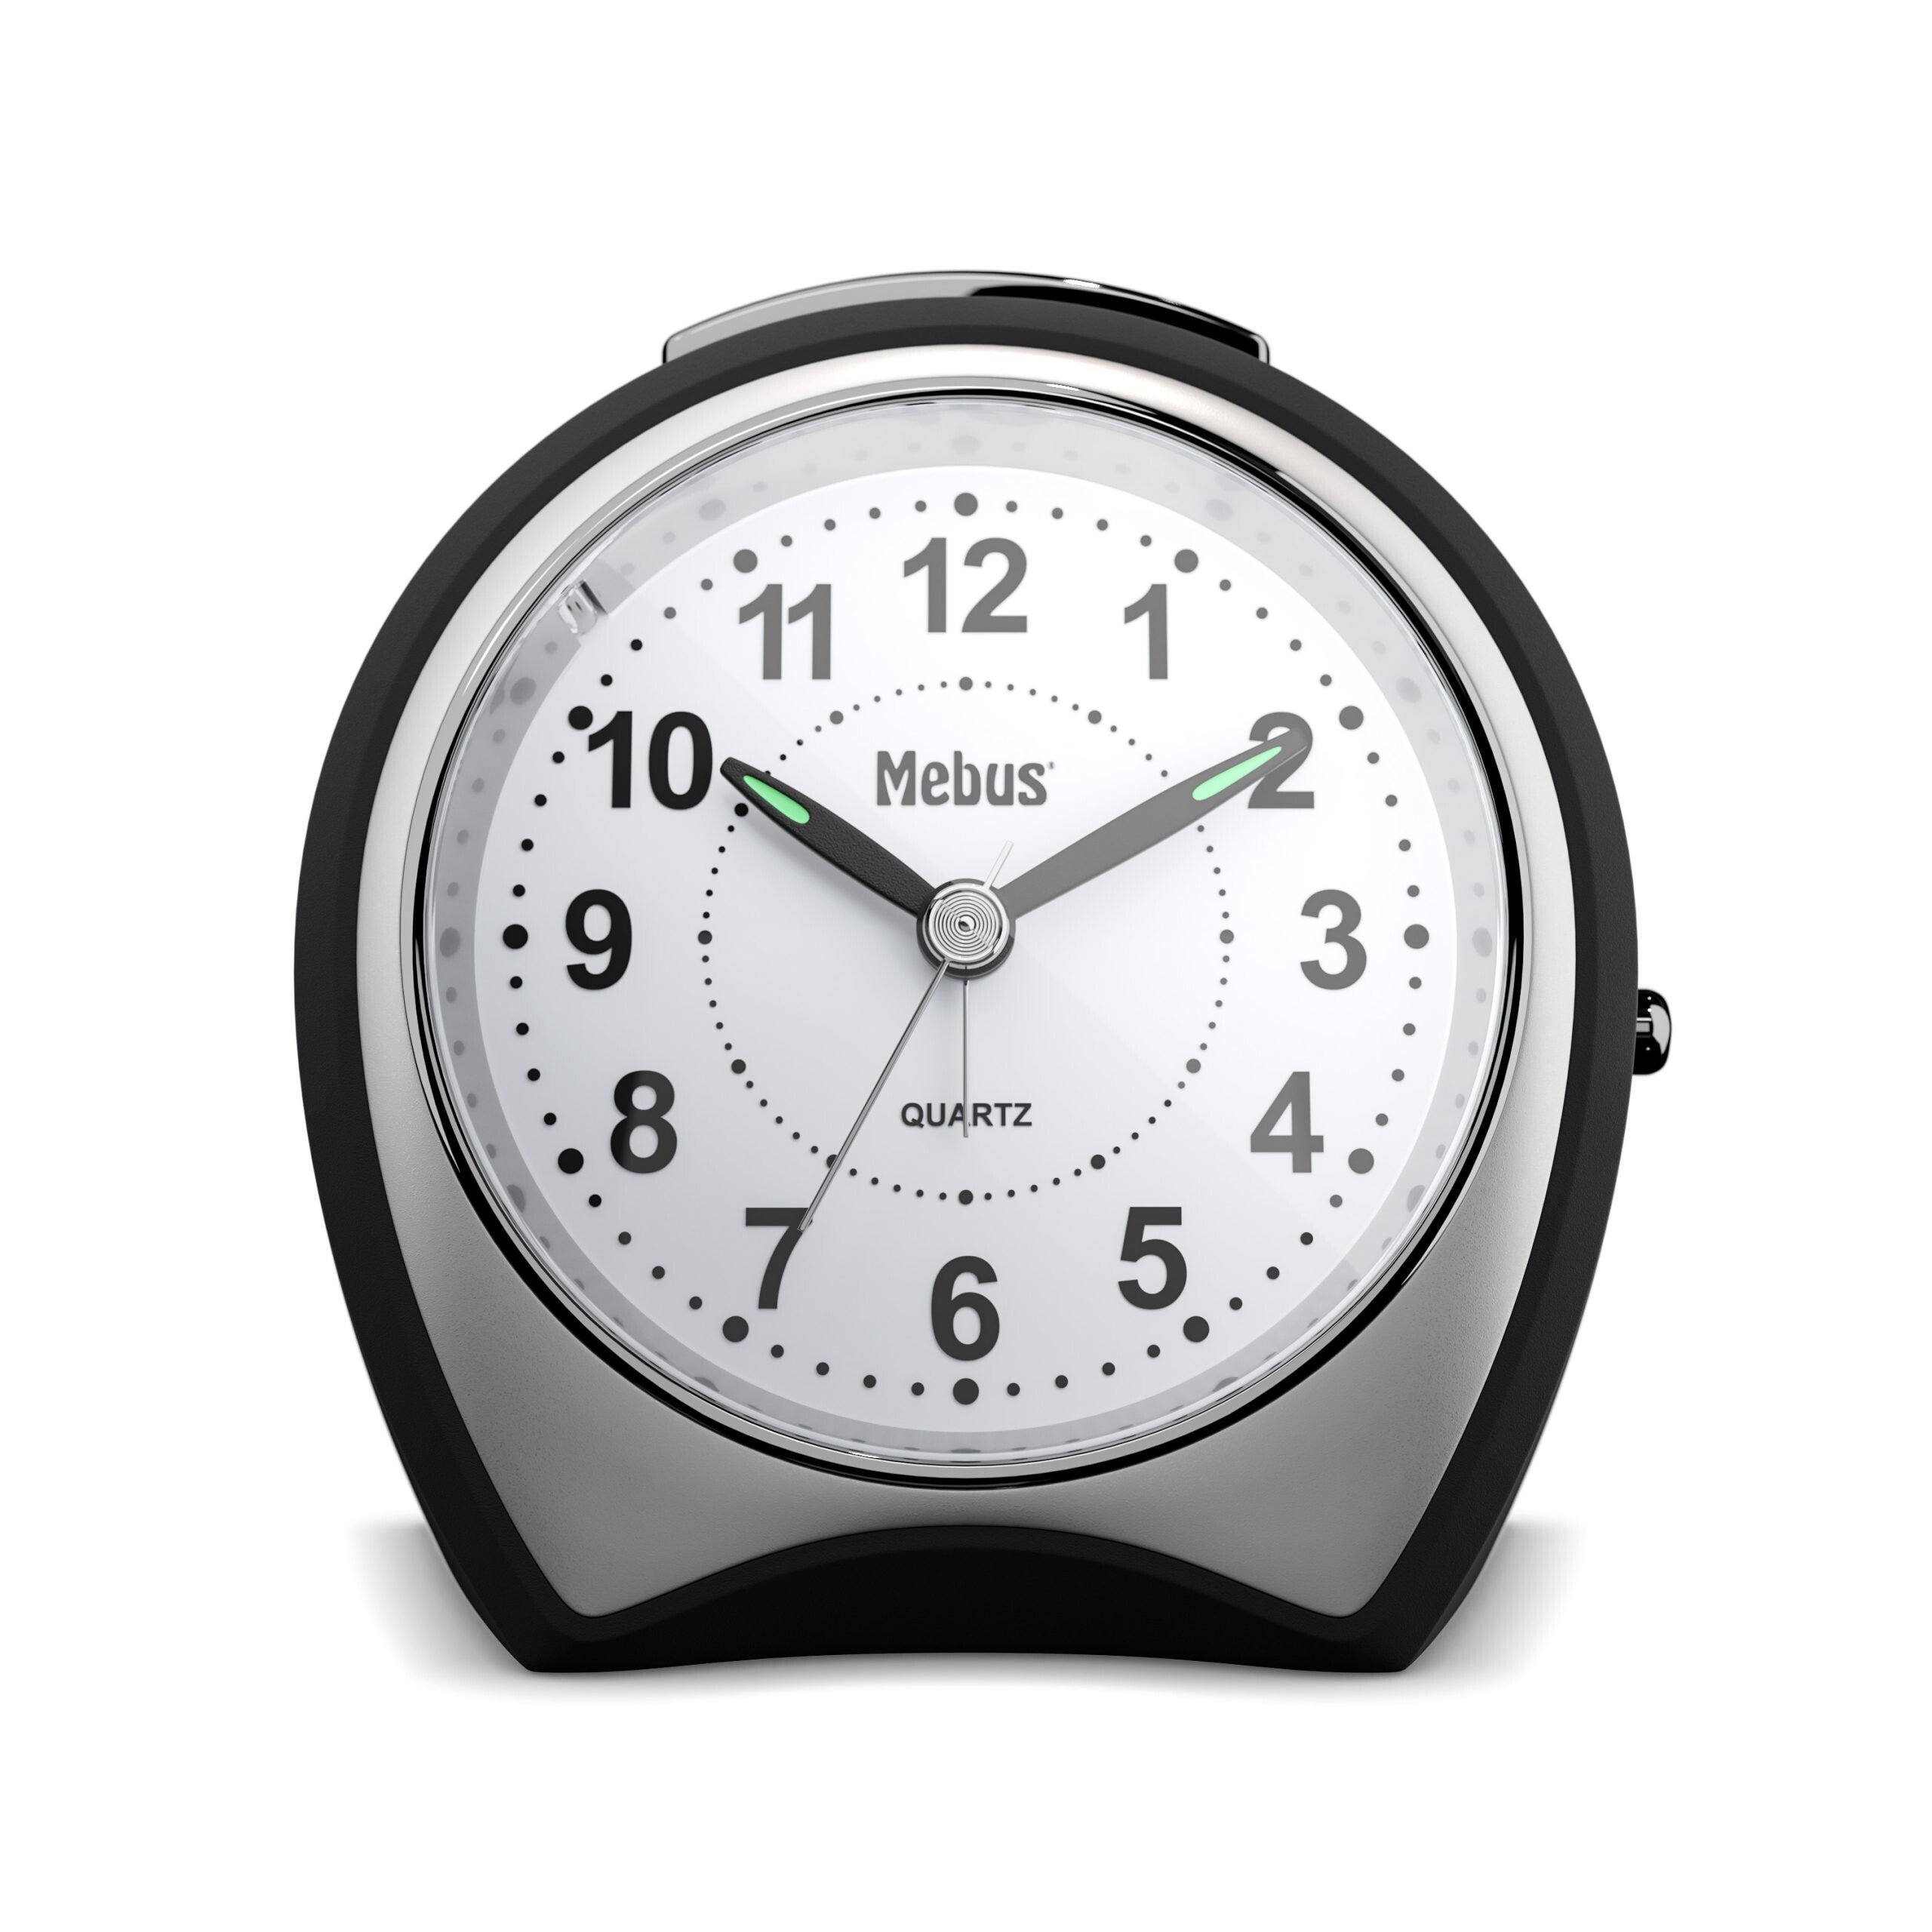 Mebus 27220 - Quartz alarm clock - Black - Grey - Plastic - 12h - Analog - Battery